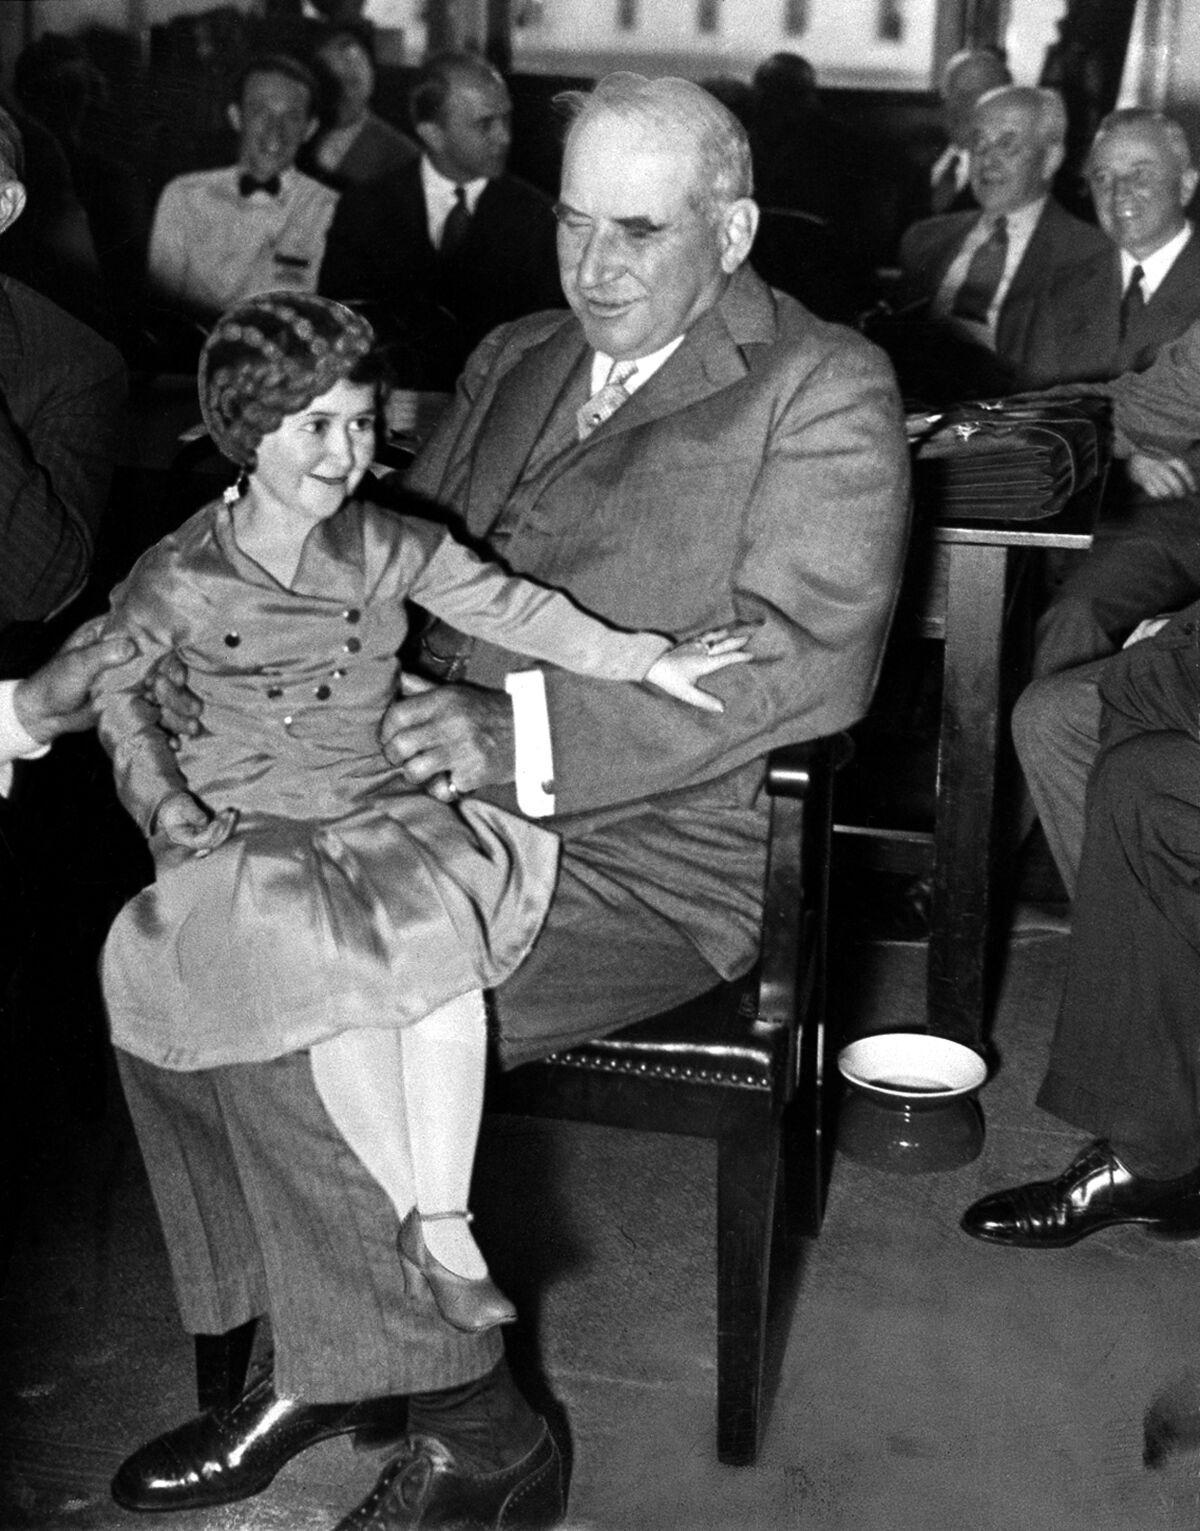 J.P. "Jack" Morgan Jr. holds performer Lya Graf on his knee during the Pecora hearings in 1933.